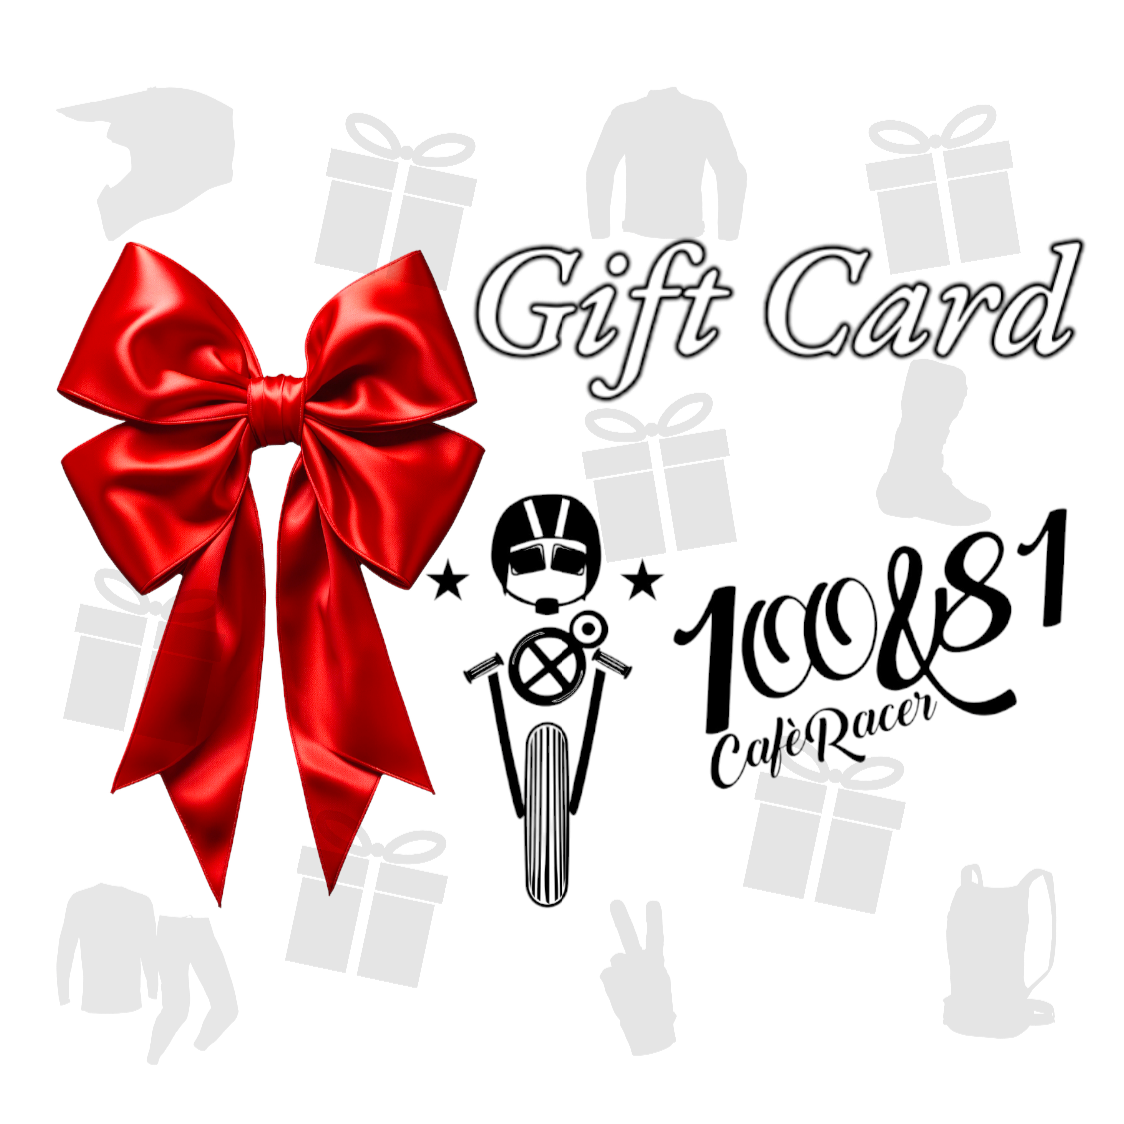 Gift Card 100&81 Cafè Racer